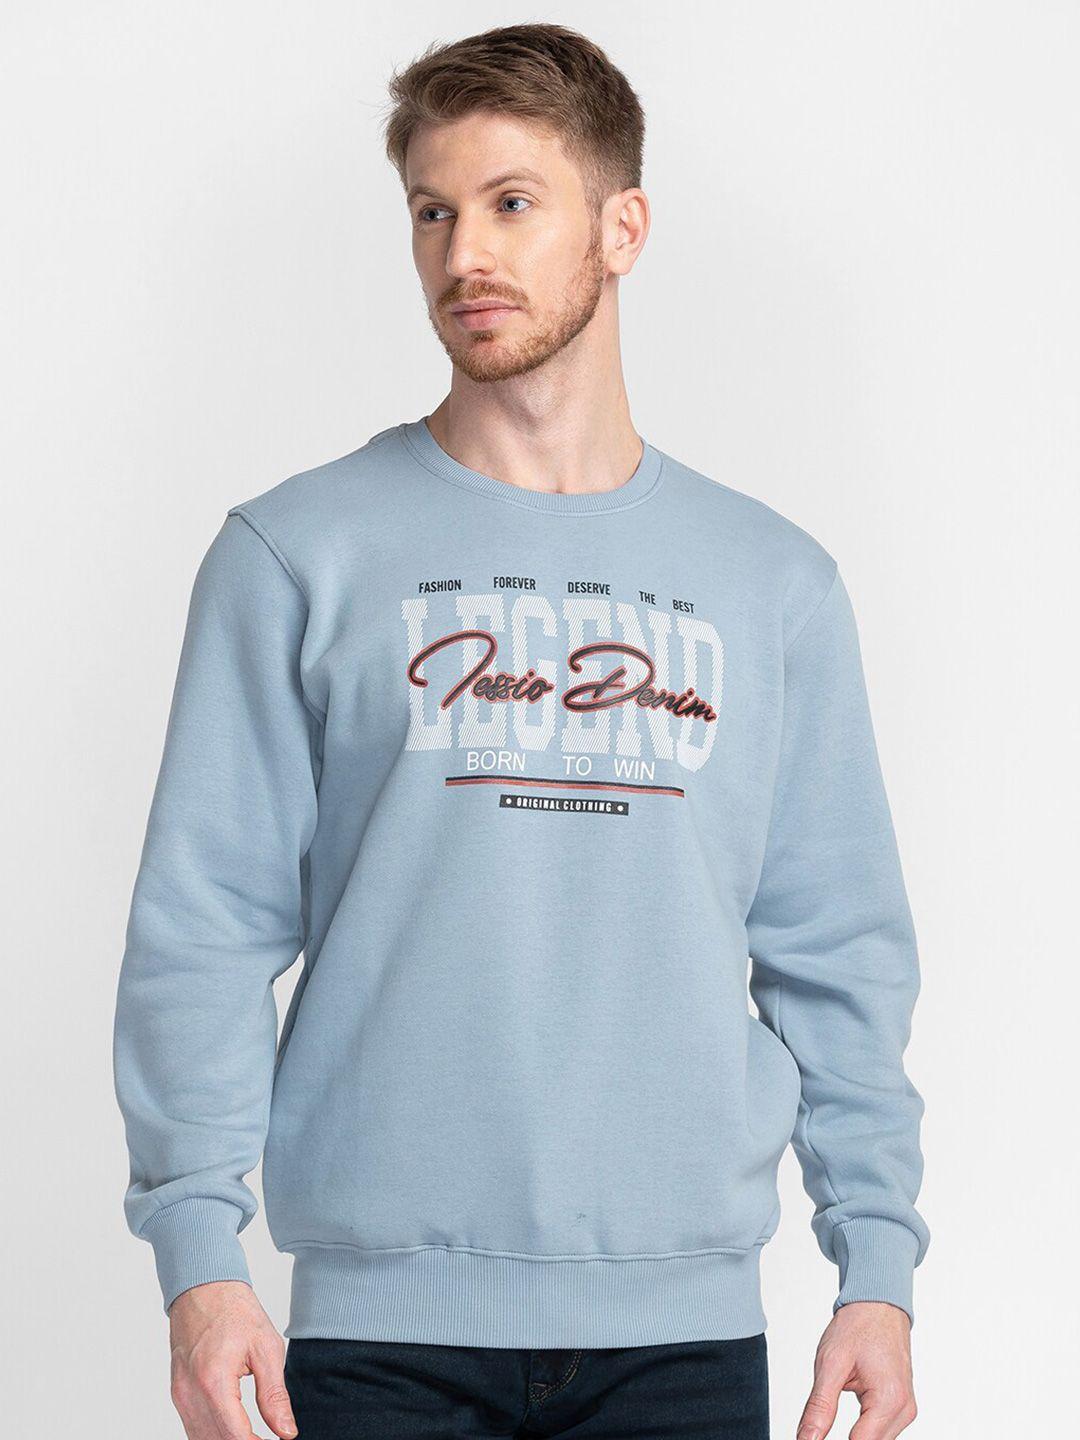 tessio men blue printed sweatshirt